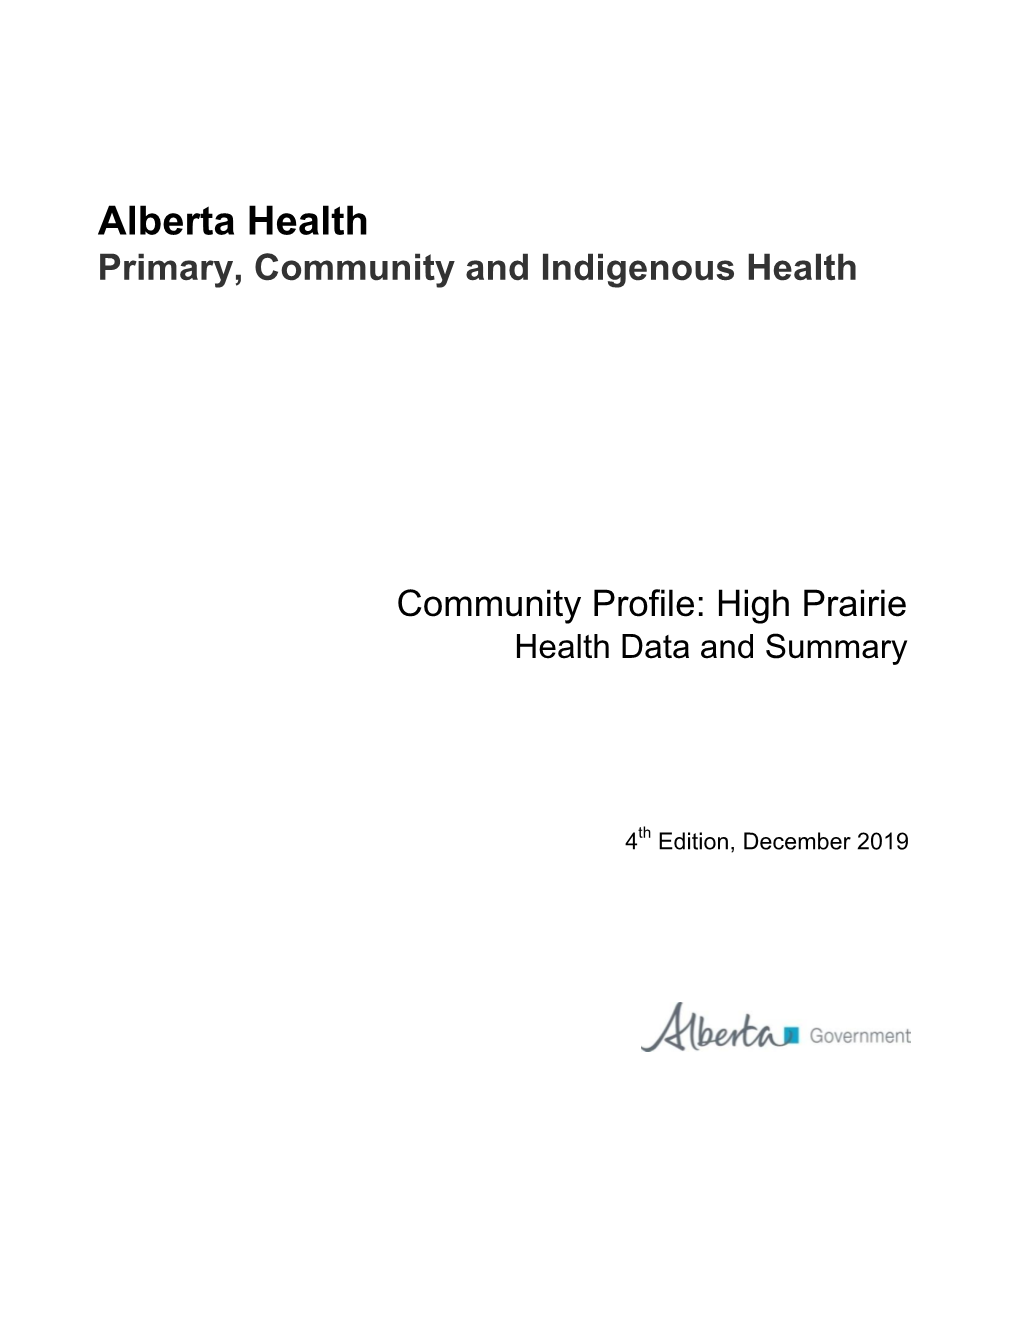 High Prairie Health Data and Summary